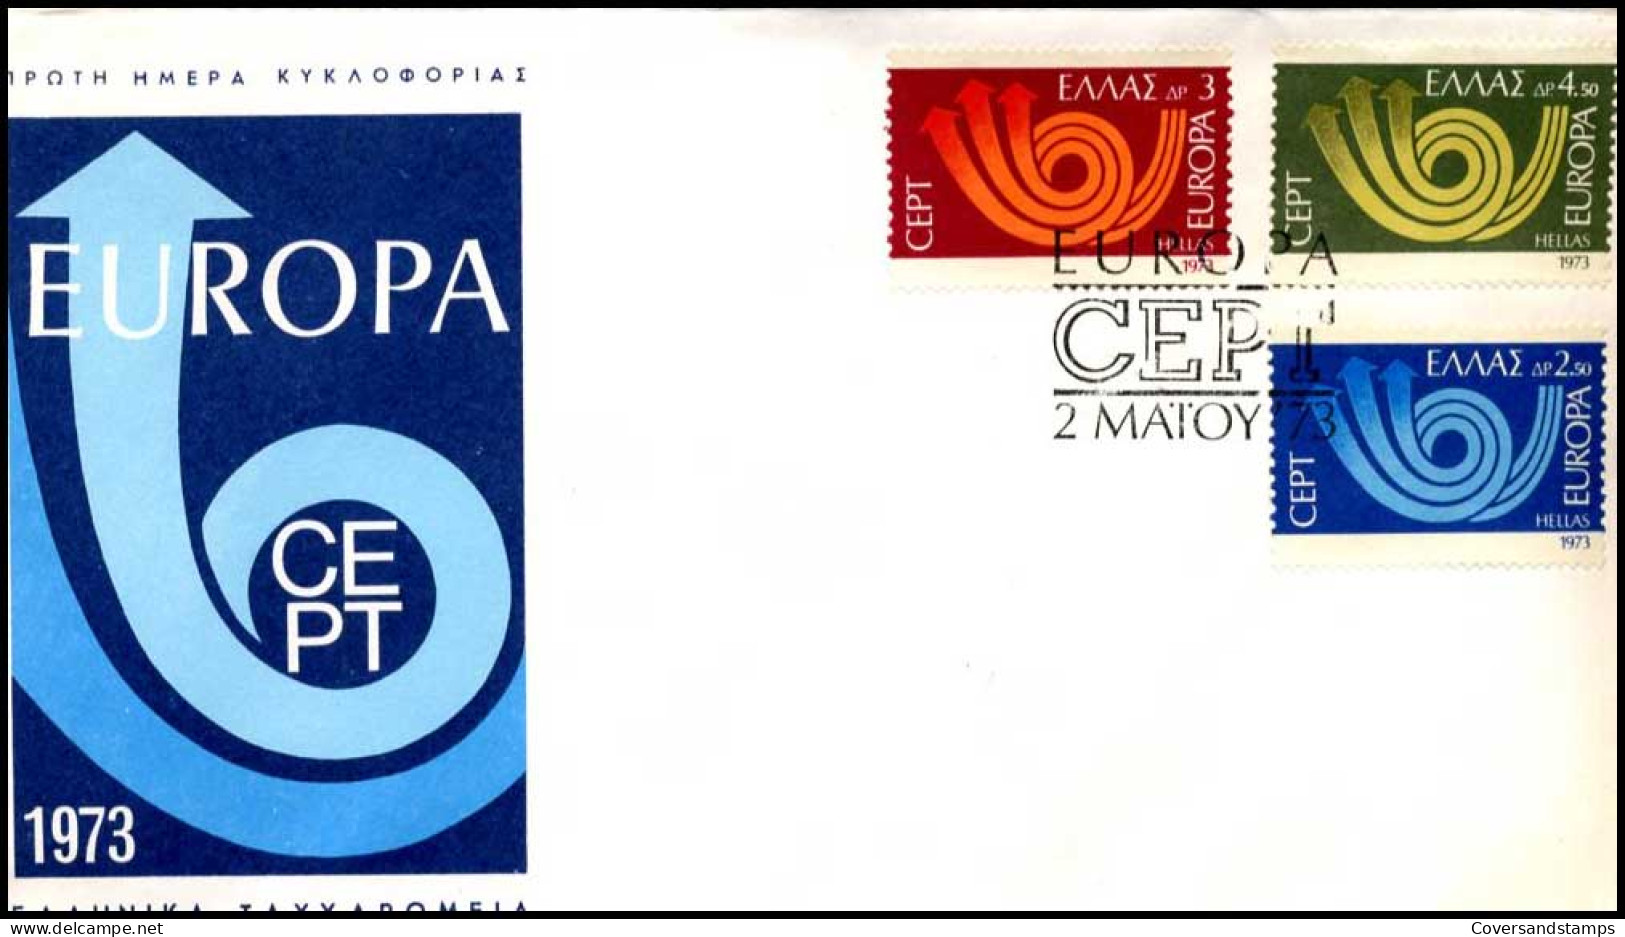  Griekenland - FDC - Europa CEPT 1973 - 1973